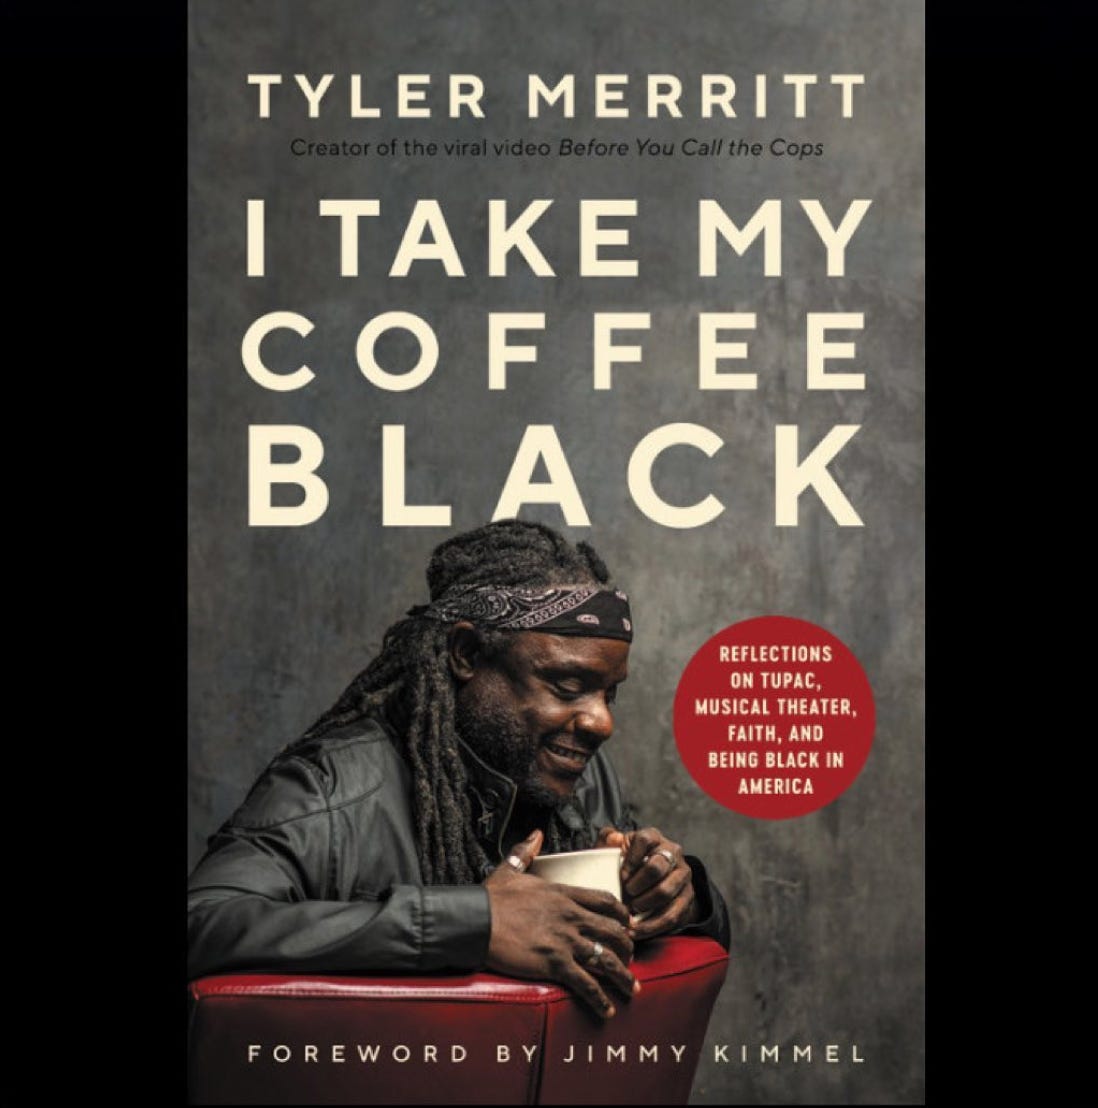 I take my coffee black book by tyler merritt